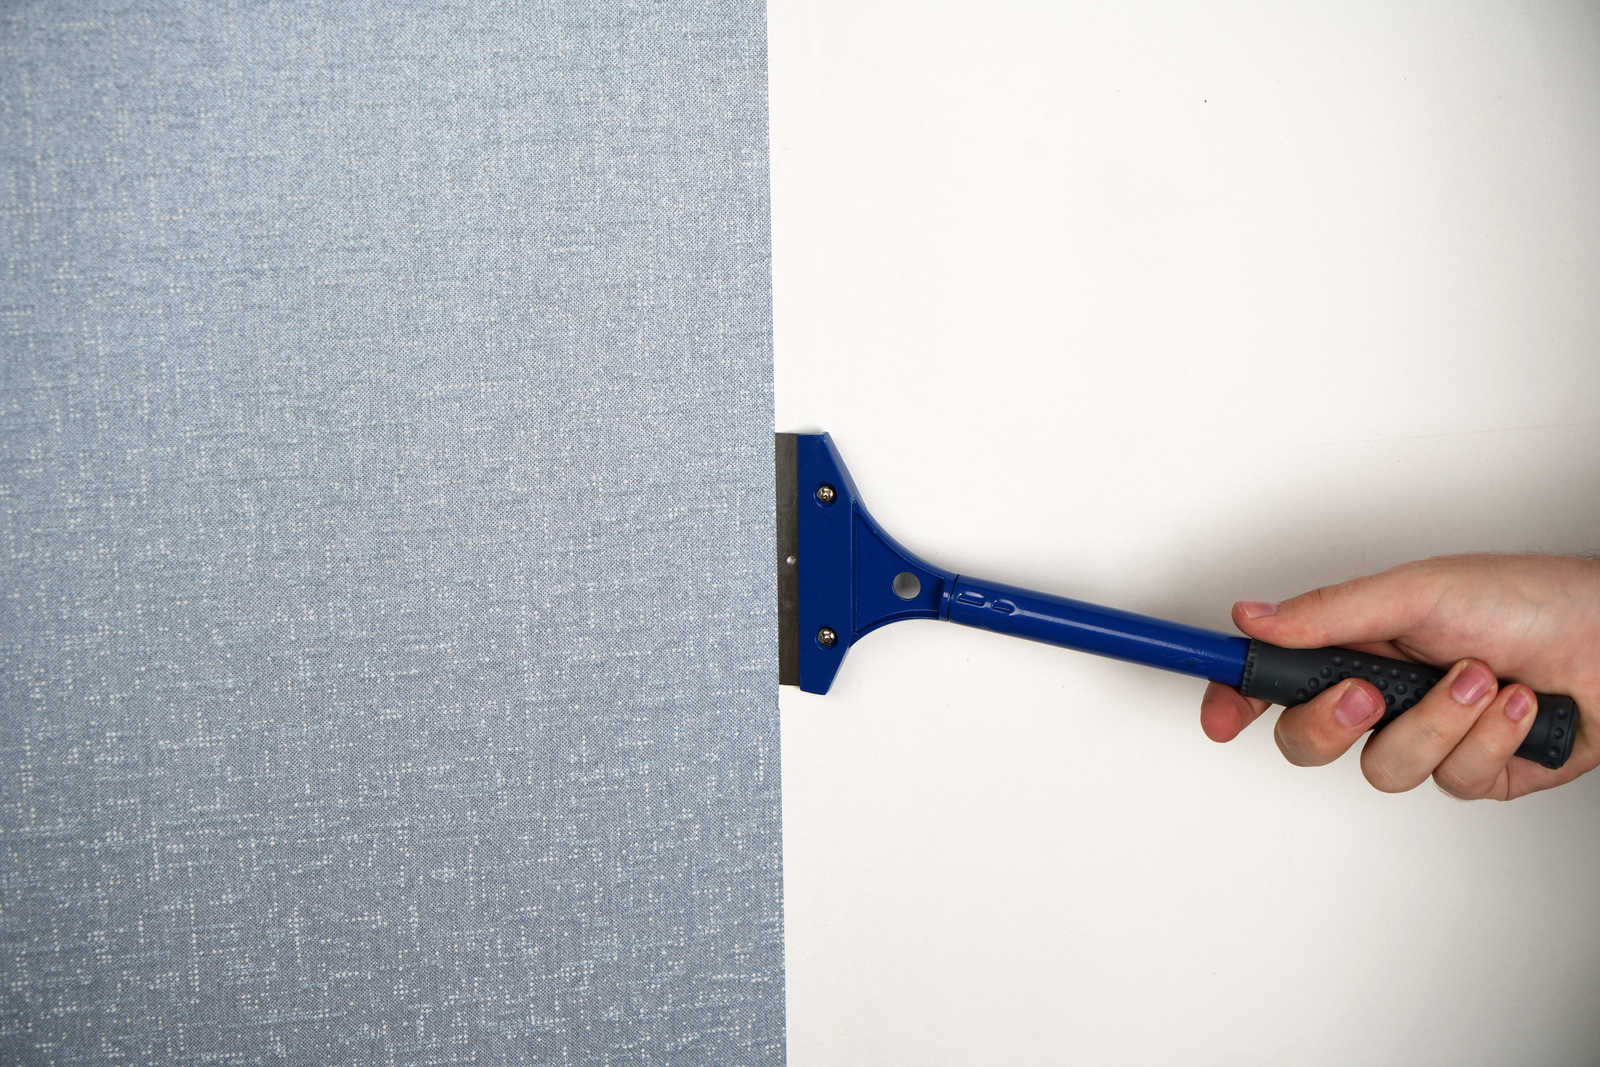             Wallpaper scraper 10cm blade with rubberized handle
        